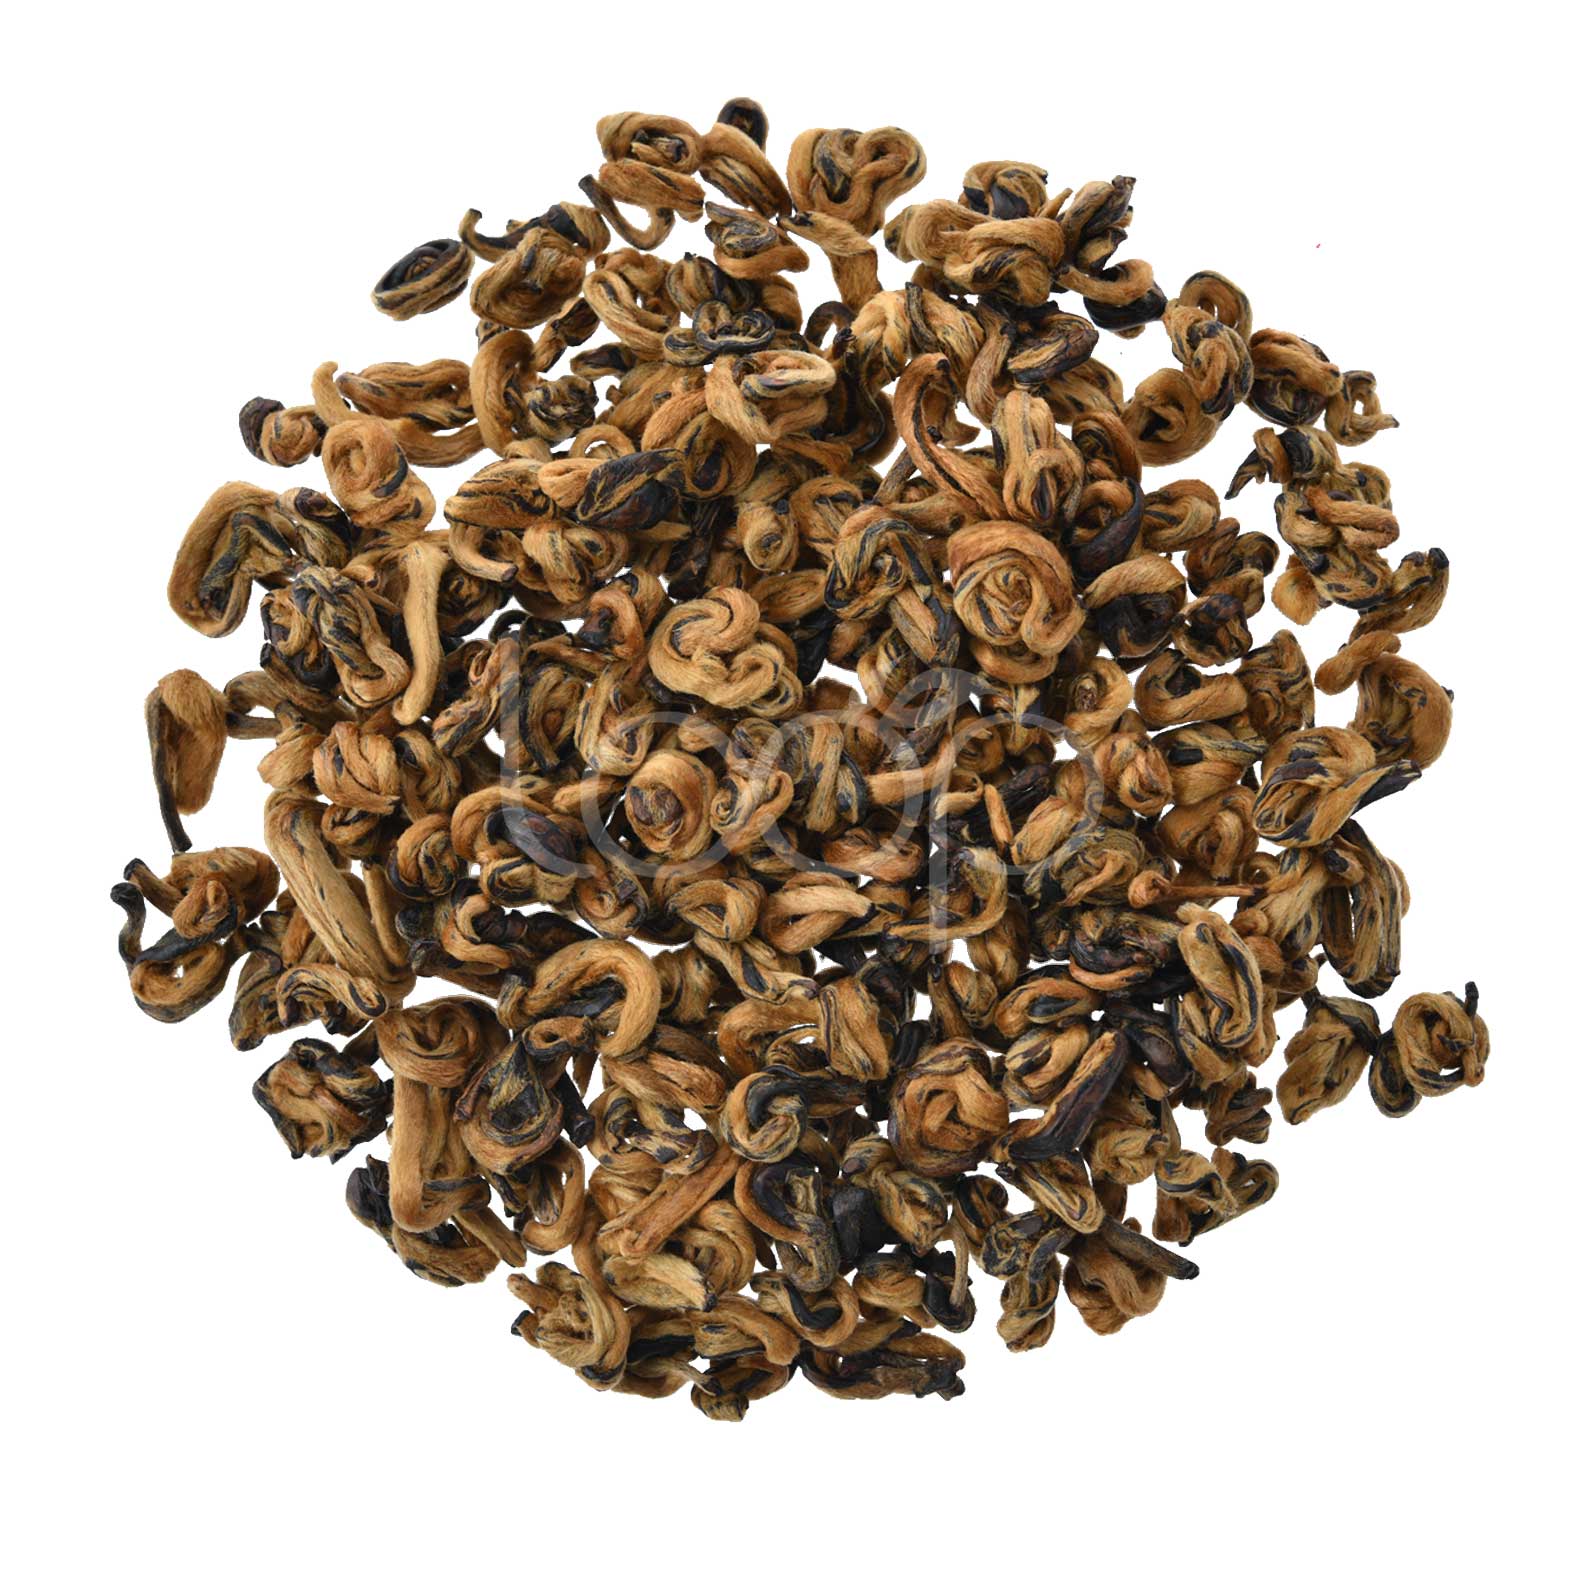 Manufacturer for Organic Loose Leaf Black Tea Bulk - Golden Spiral Tea China Black Tea #1 – Goodtea